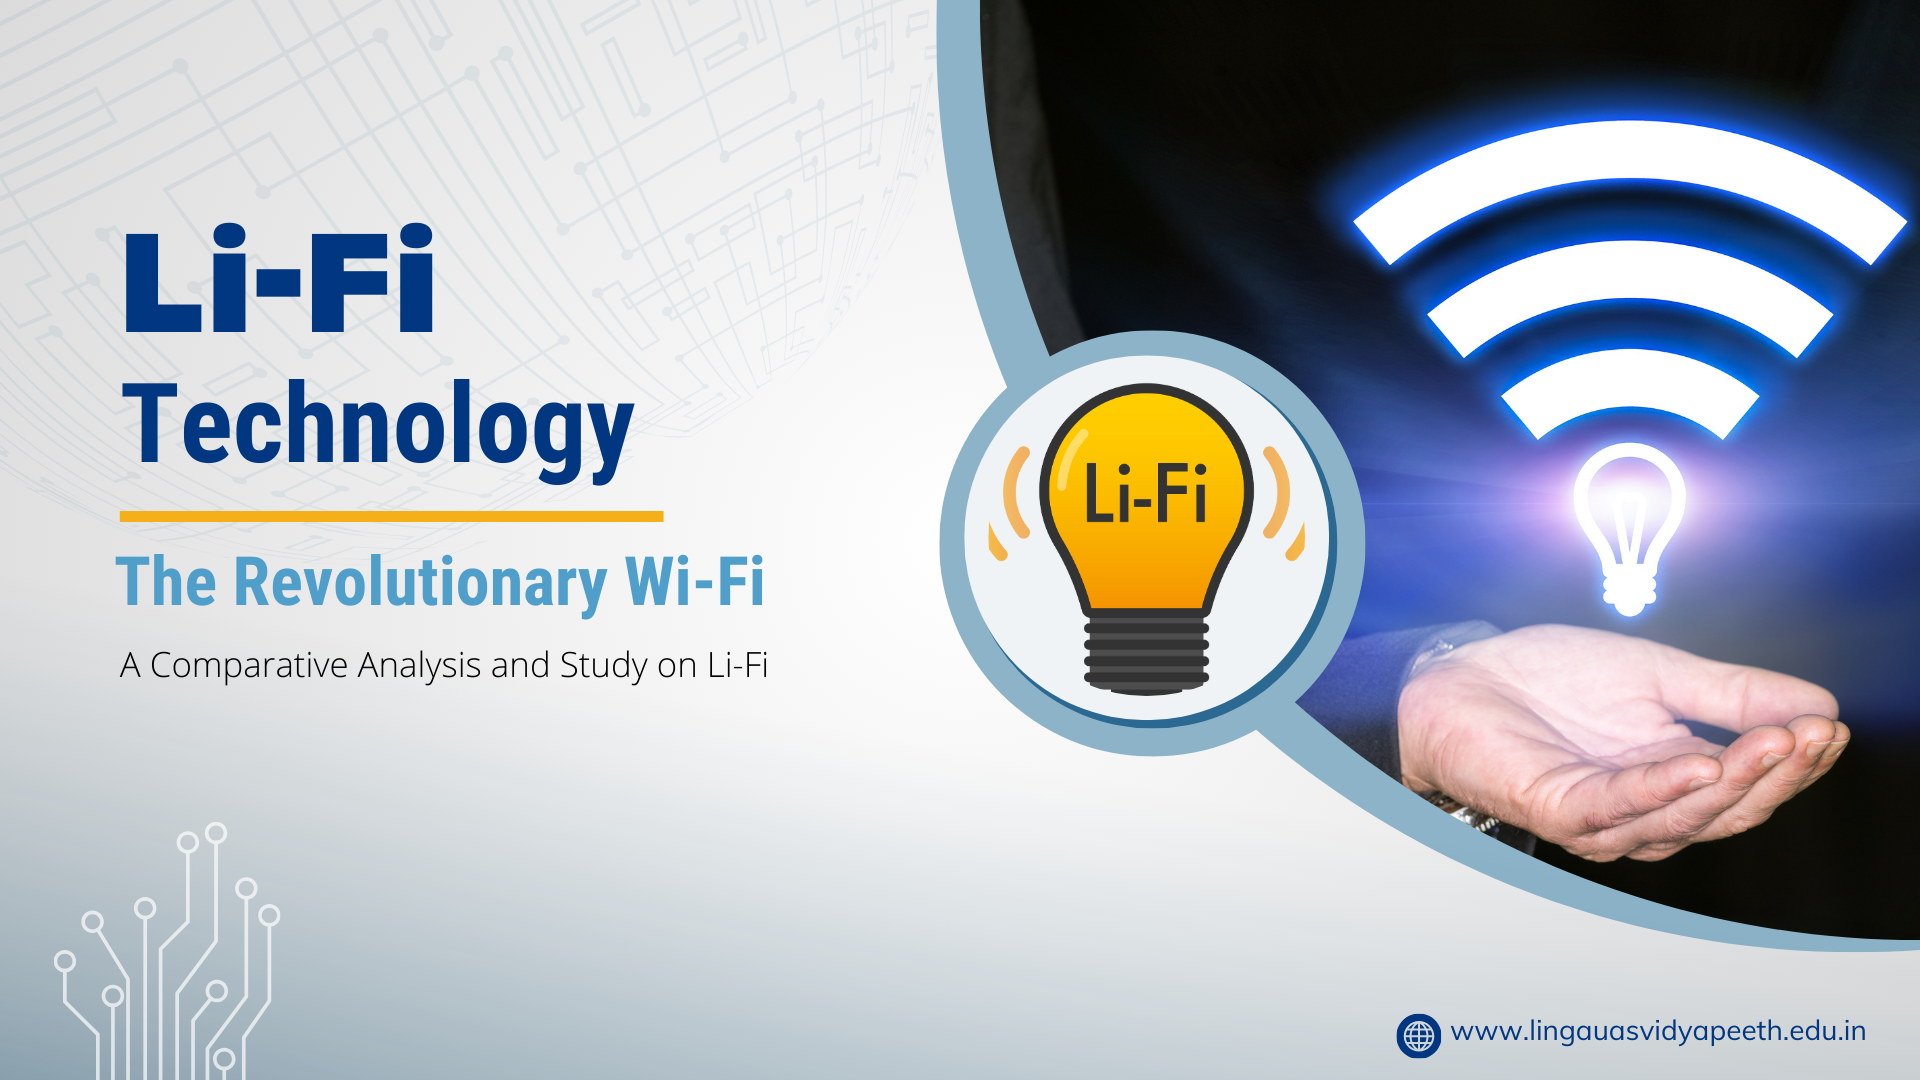 Li-Fi Technology – The Revolutionary Wi-Fi